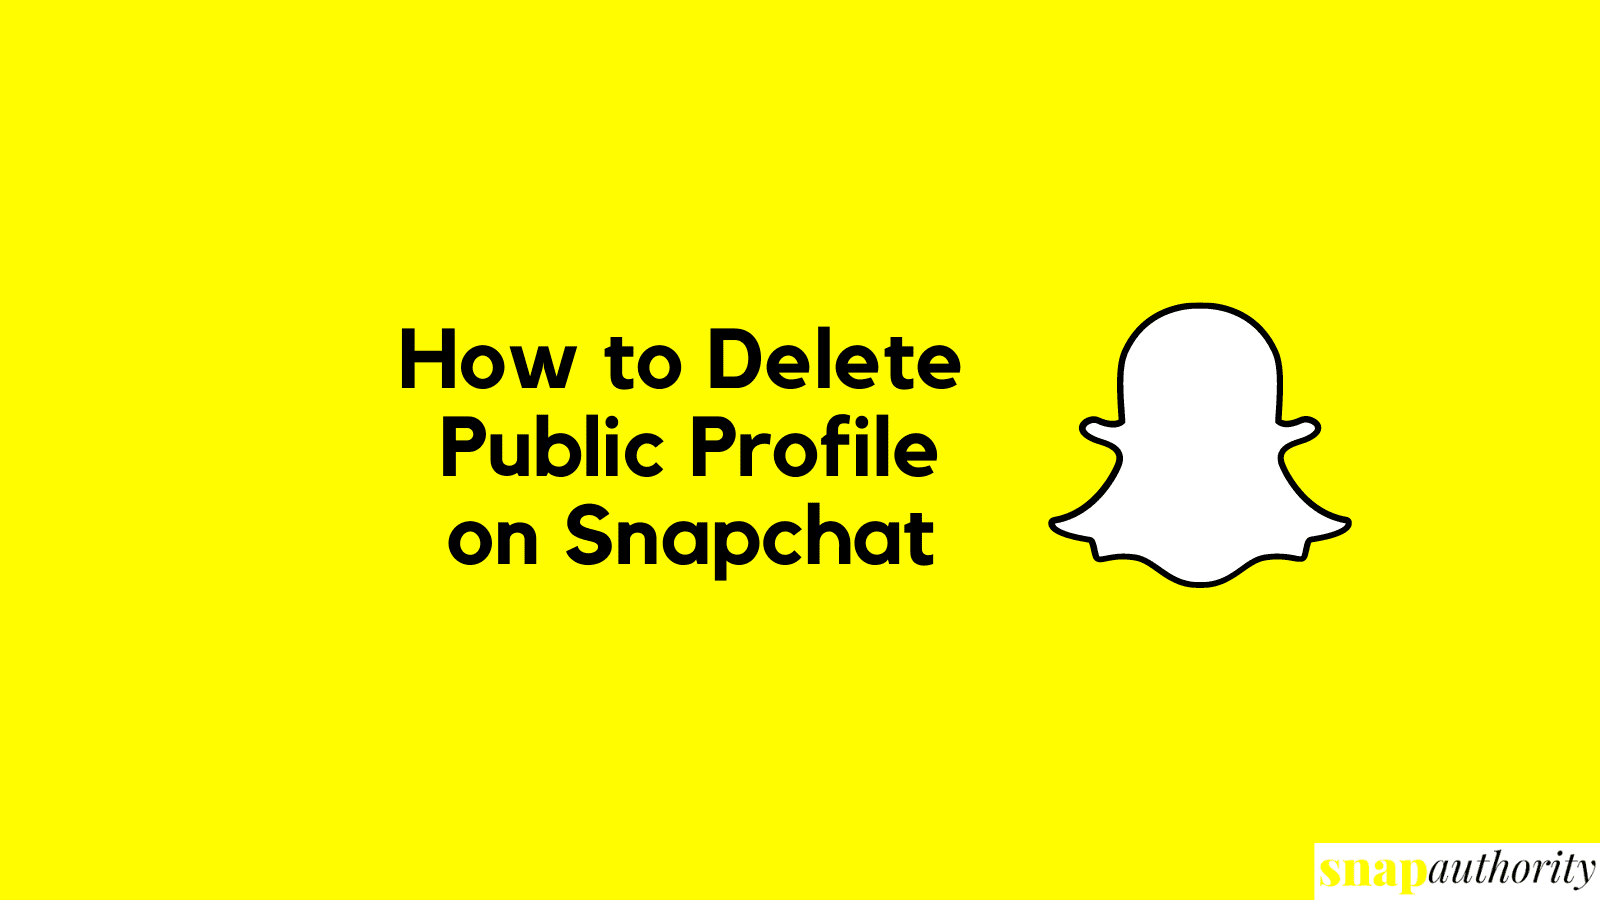 How to delete public profile on Snapchat